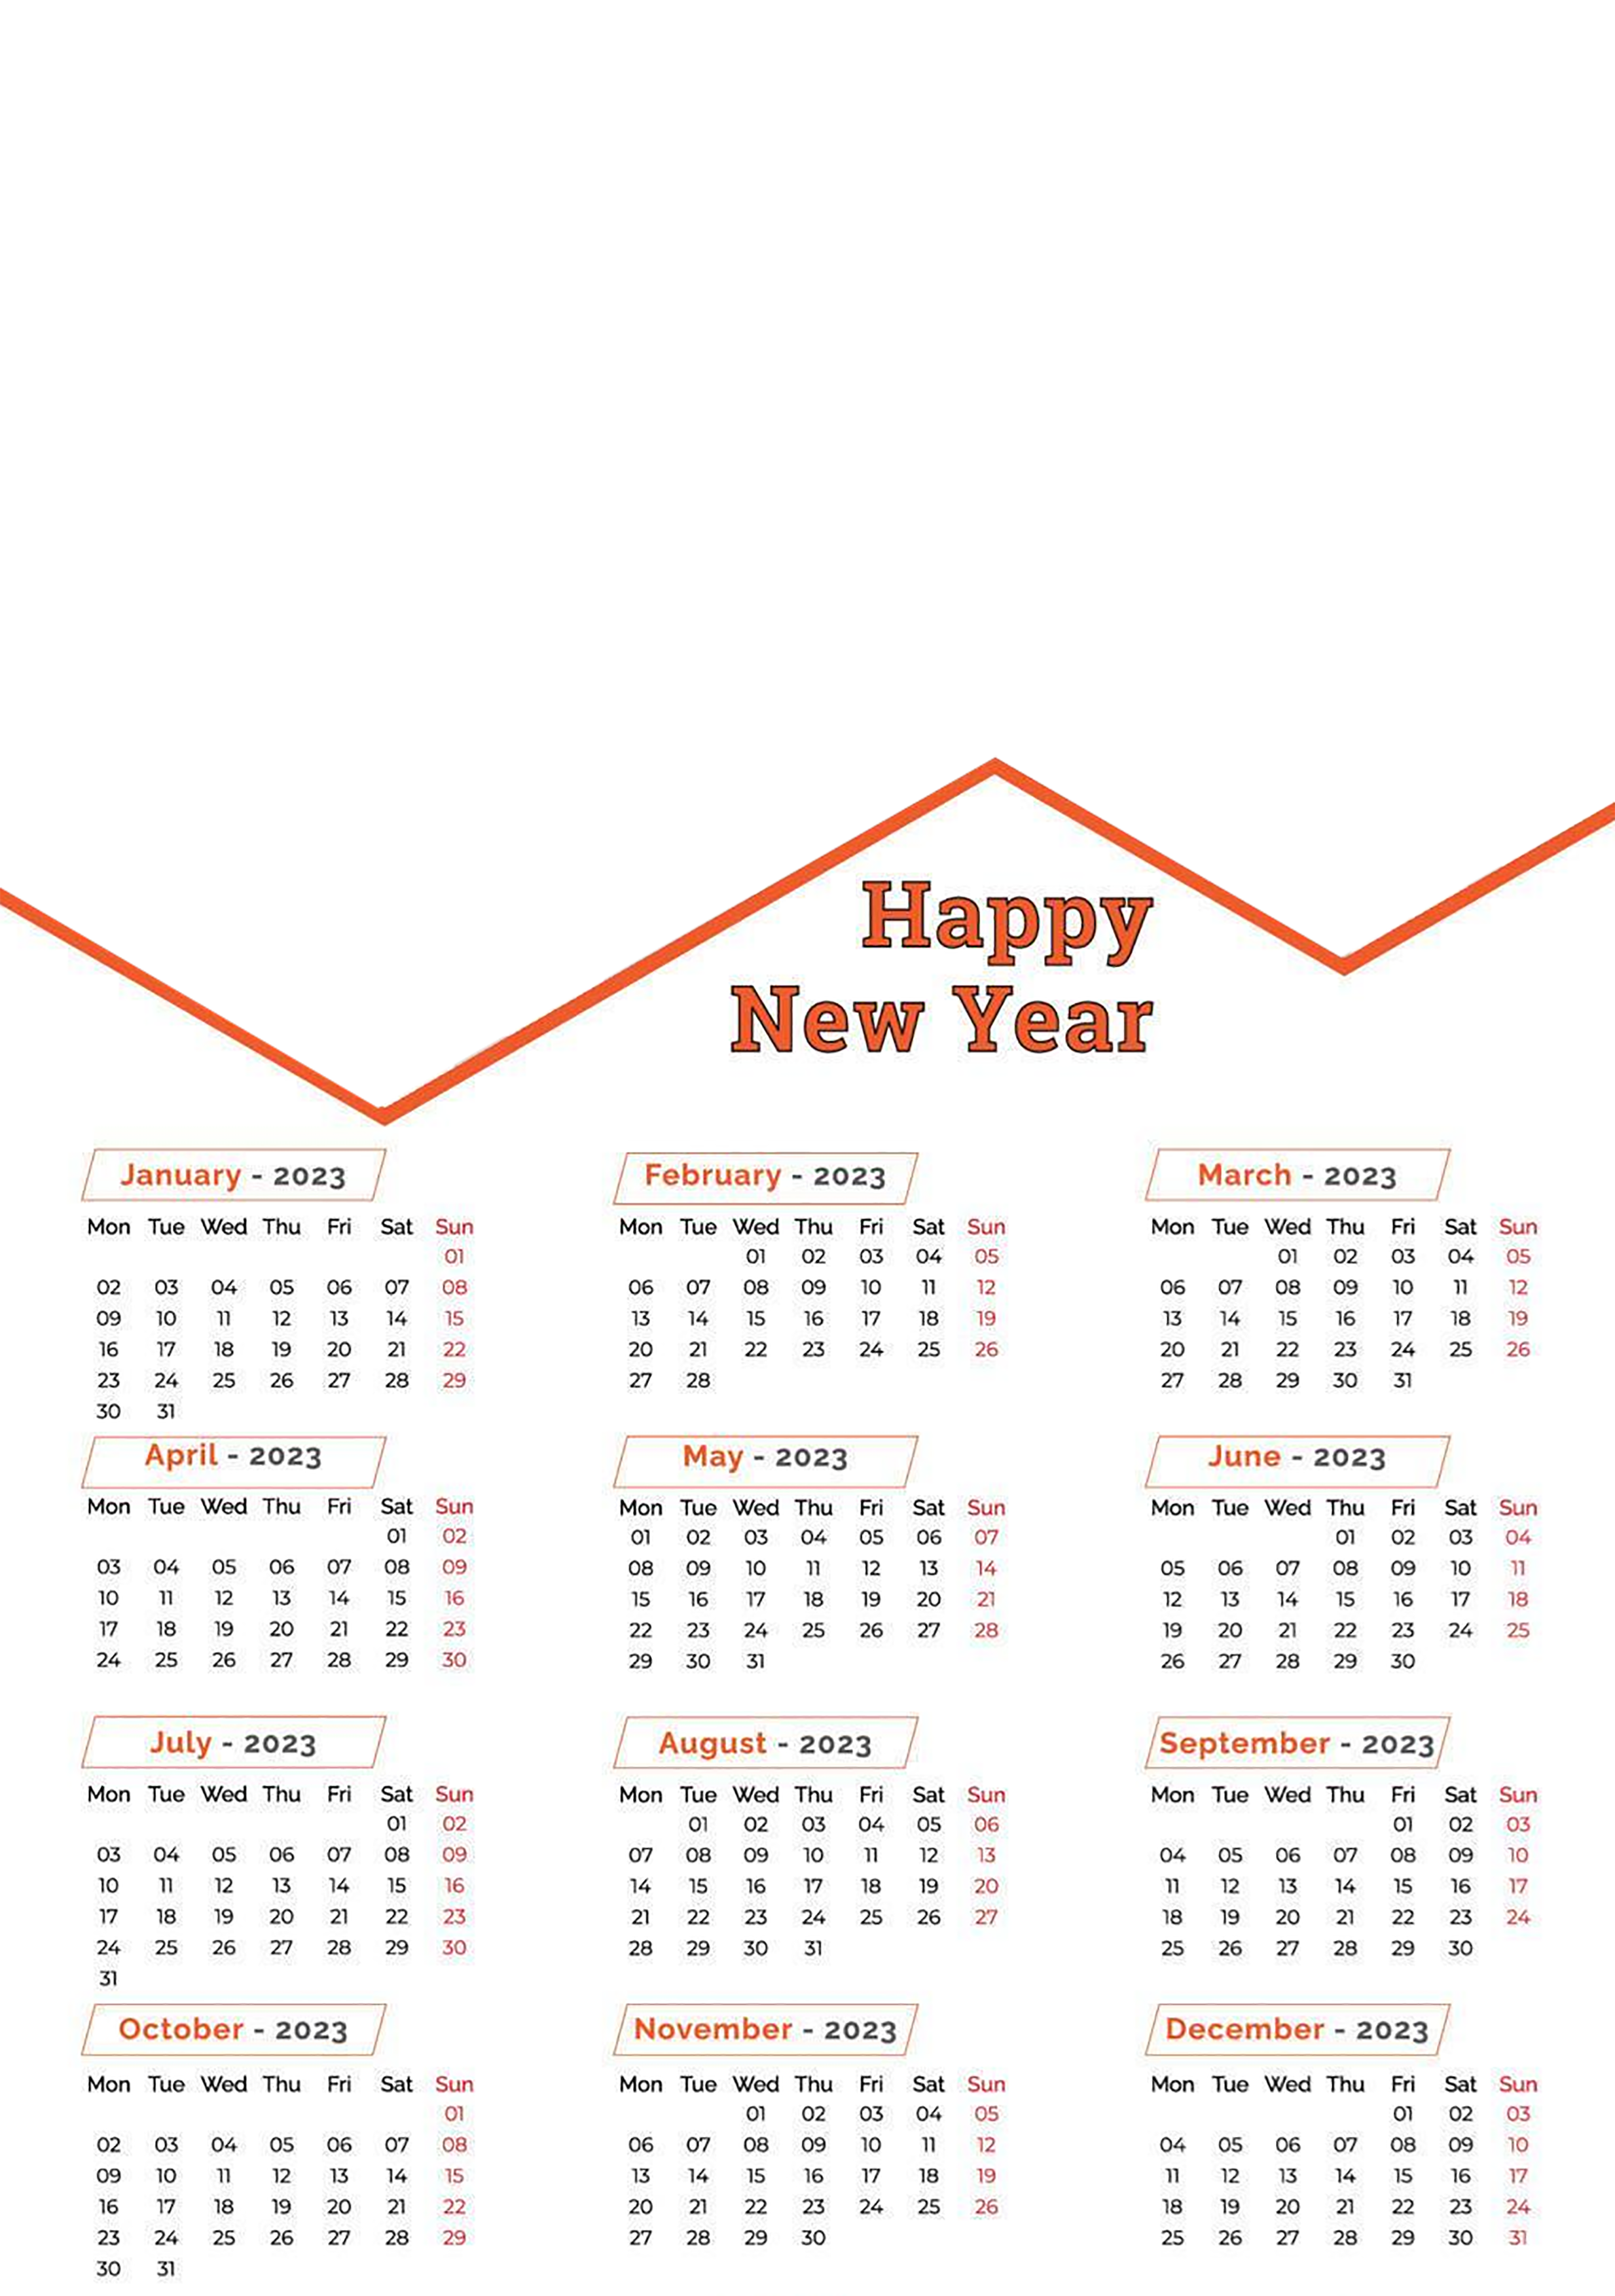 CDAR1 - HAPPY NEW YEAR Calendar 2023 TEMPLATE